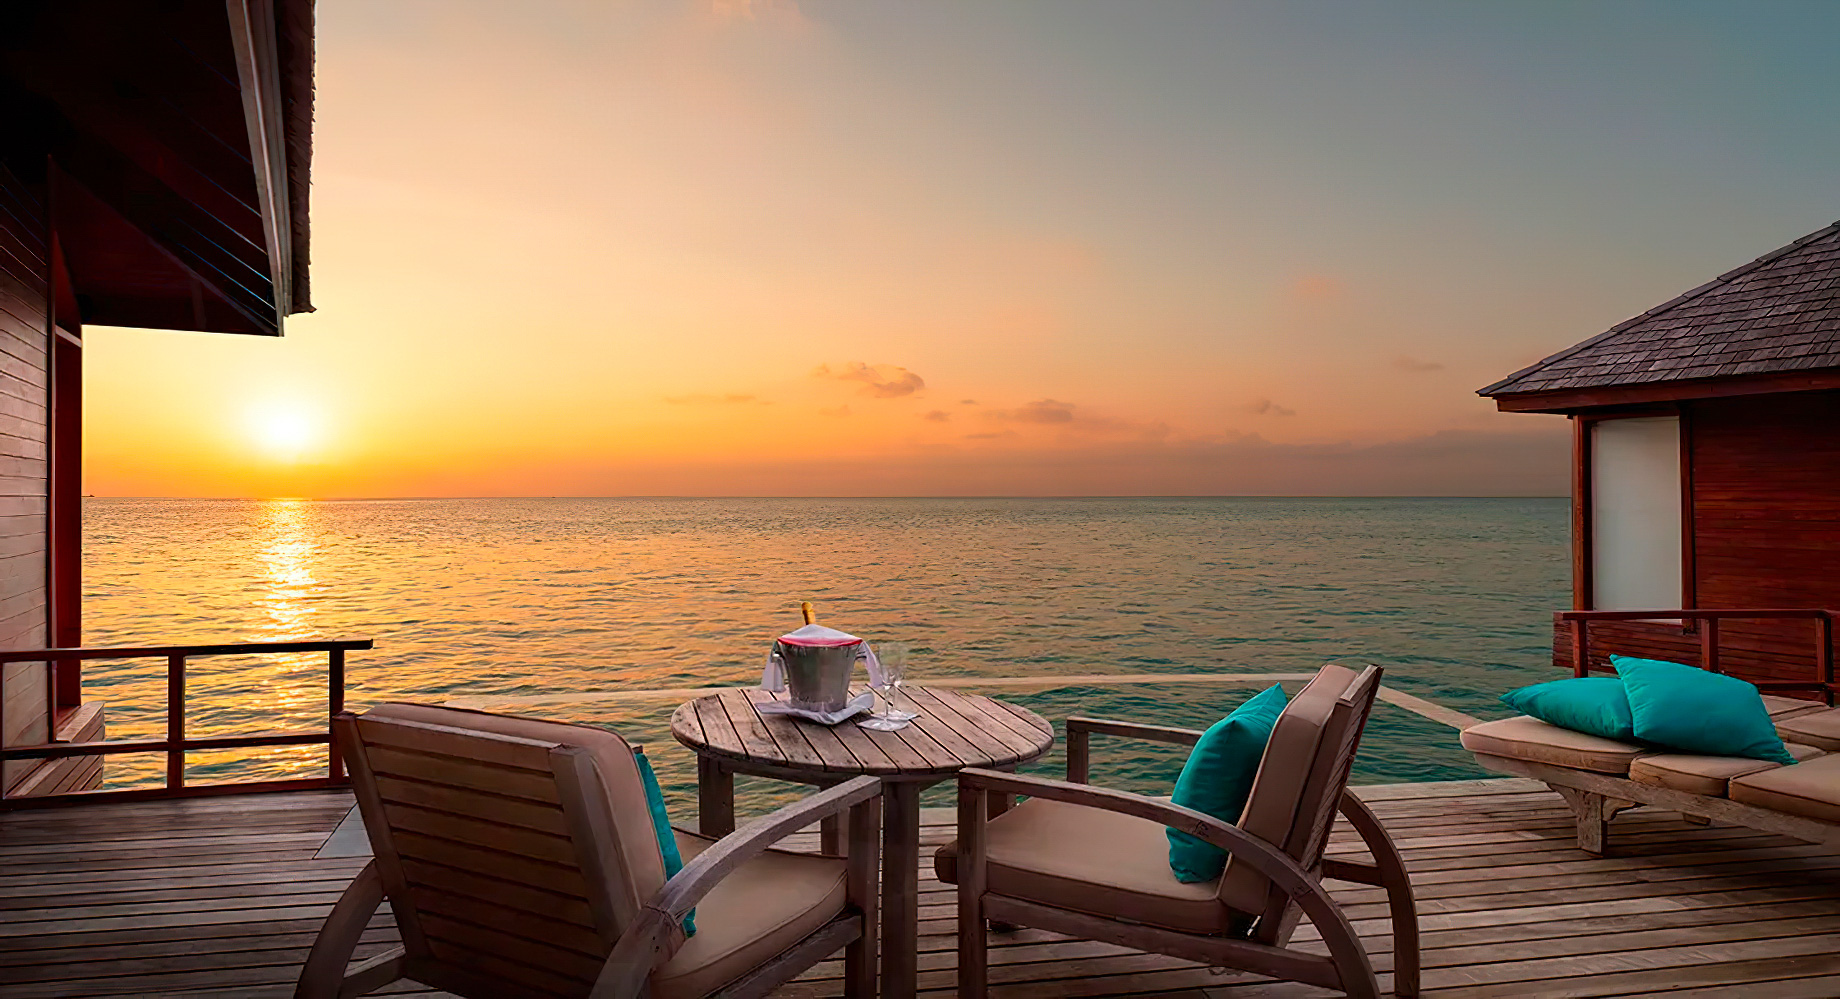 Anantara Thigu Maldives Resort – South Male Atoll, Maldives – Sunset Over Water Pool Suite Deck